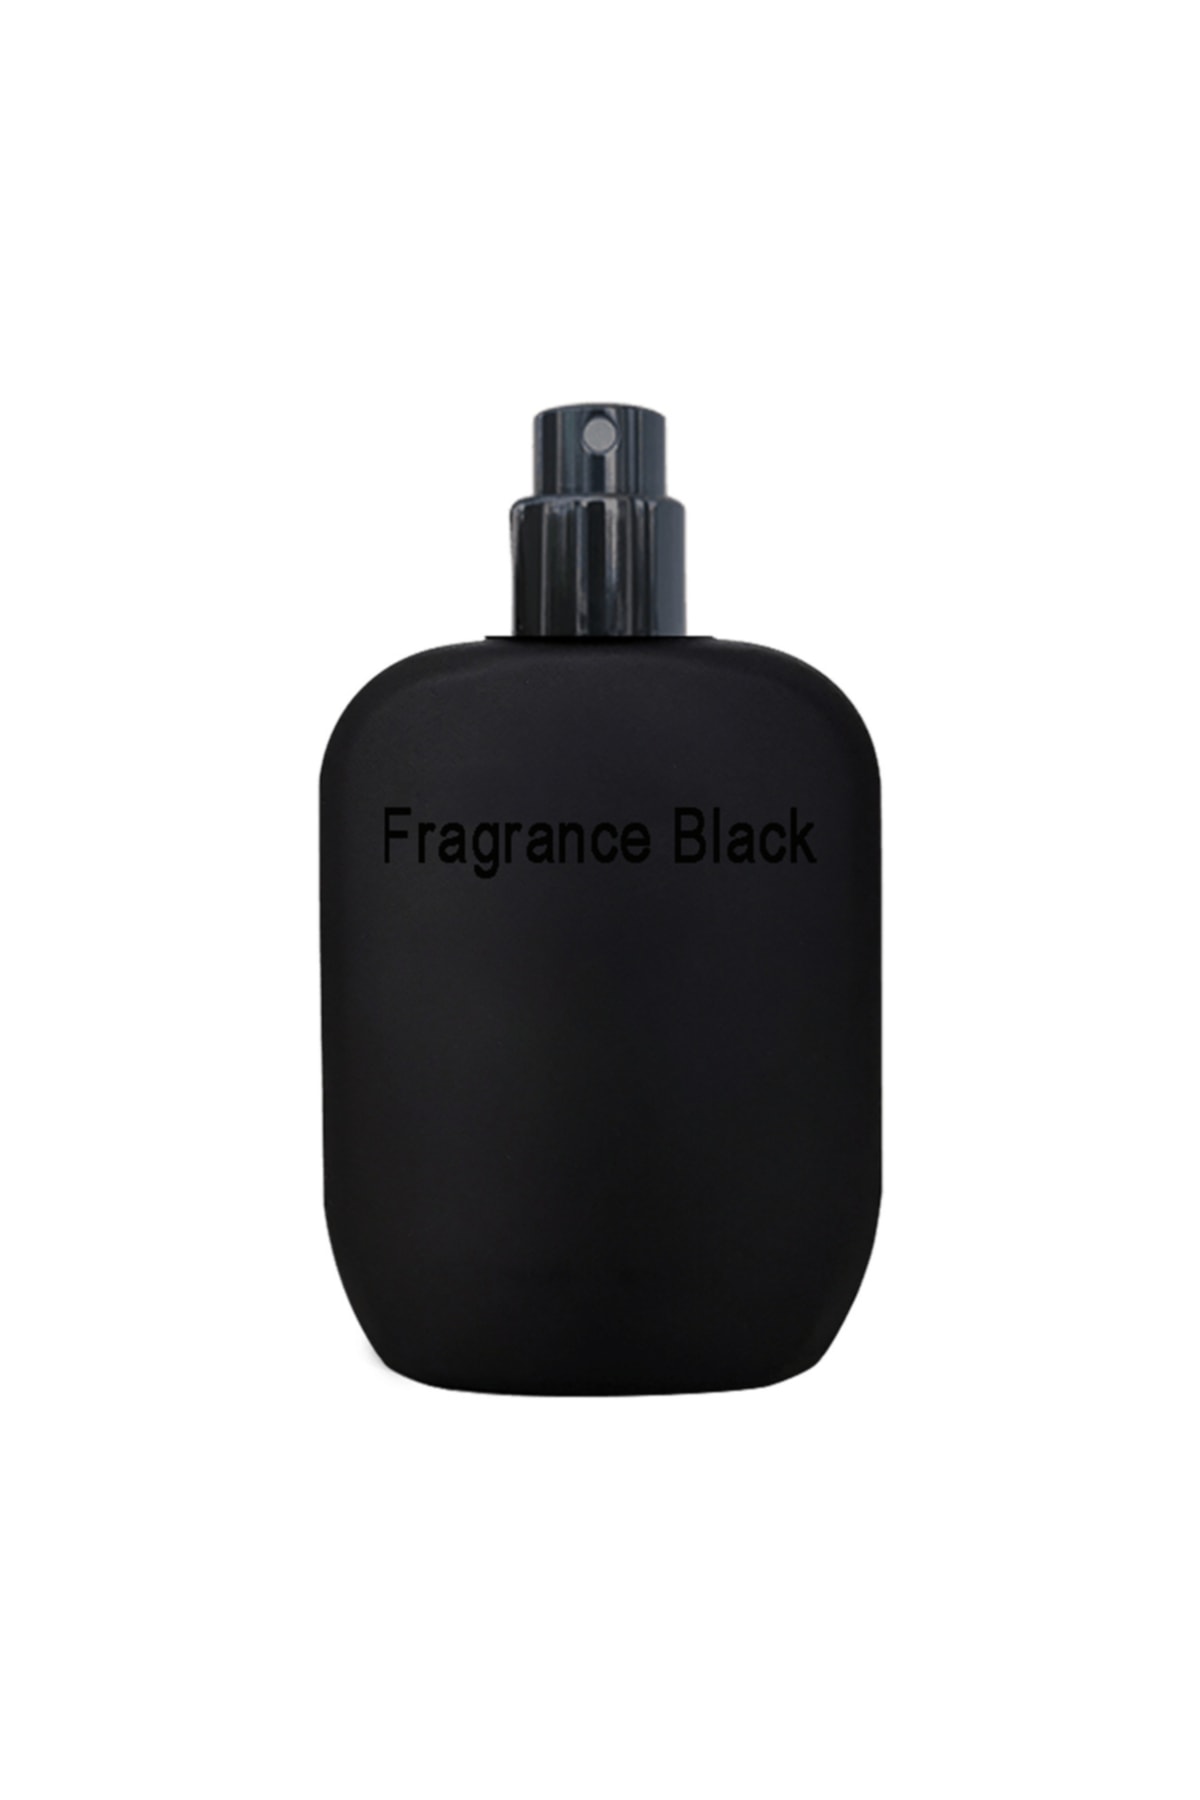 Fragrance Black